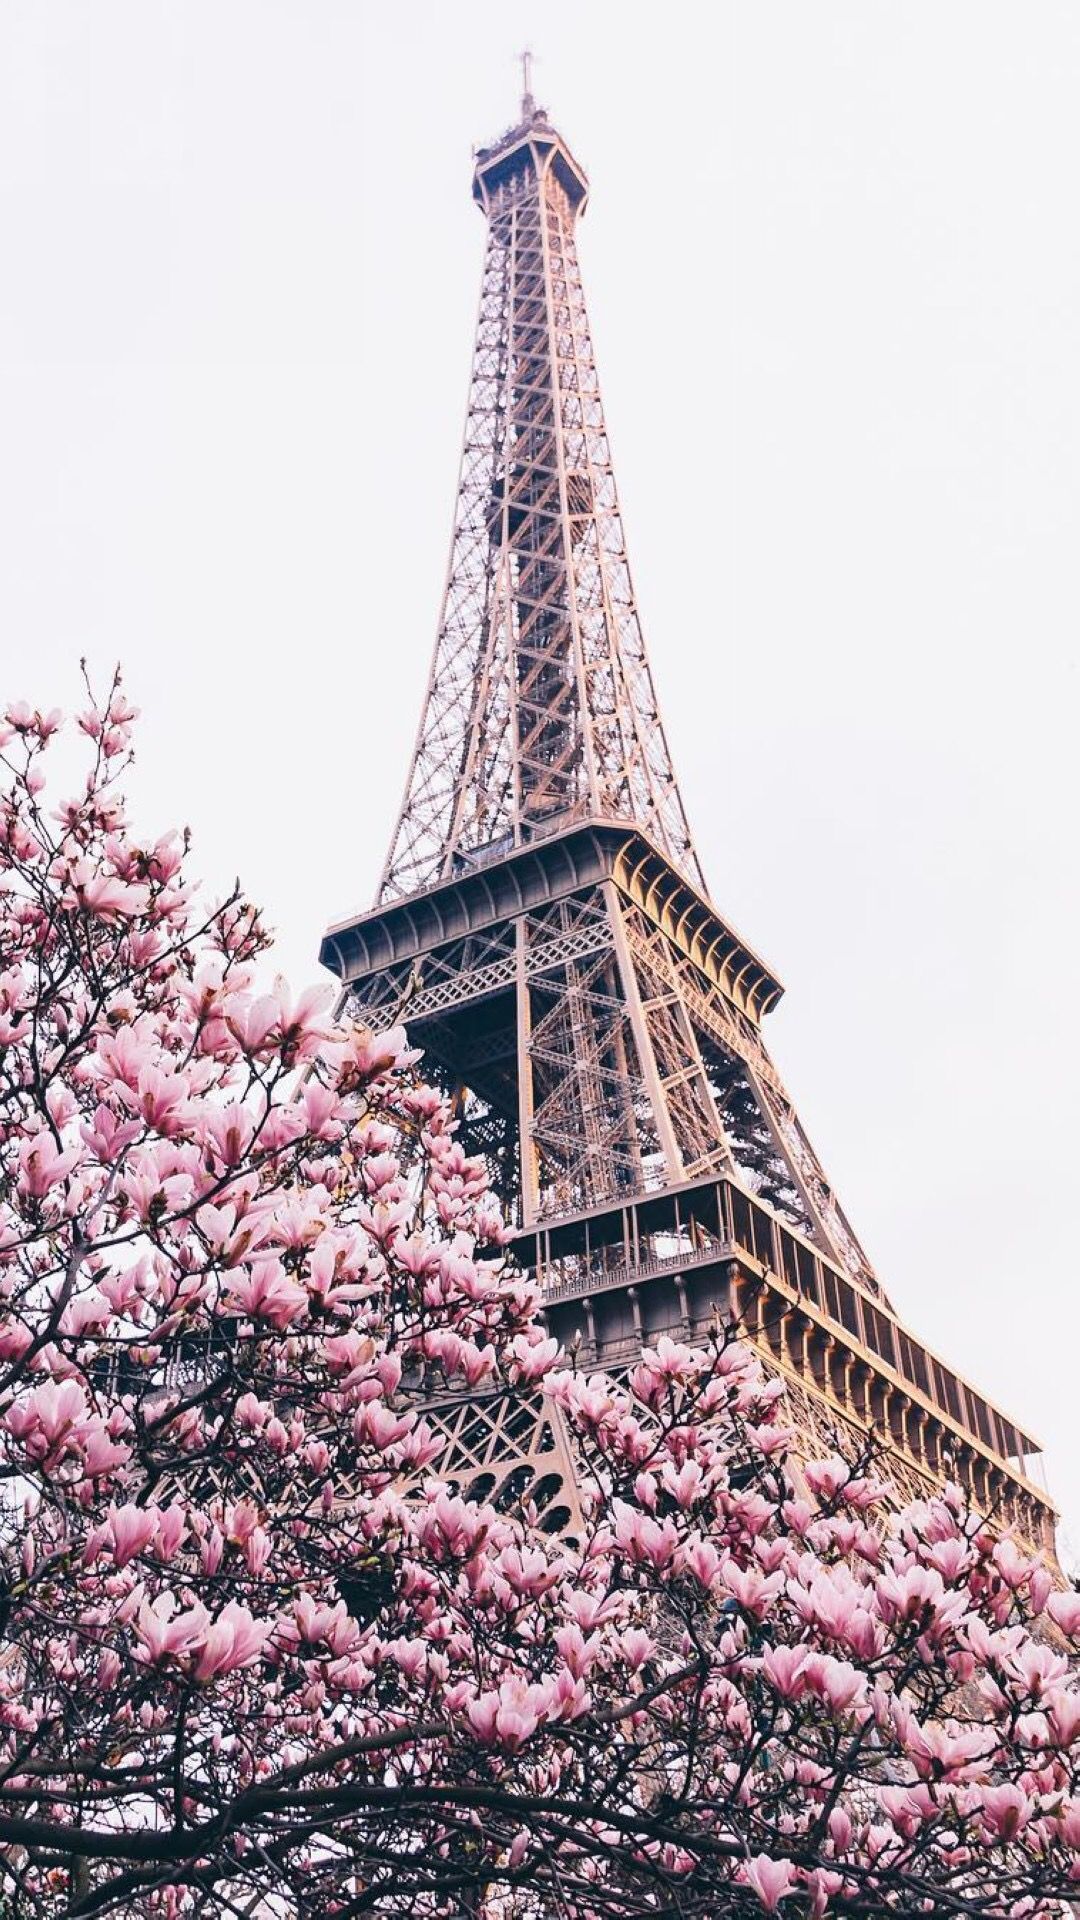 Wallpaper ♡. Paris wallpaper, Paris background, Eiffel tower